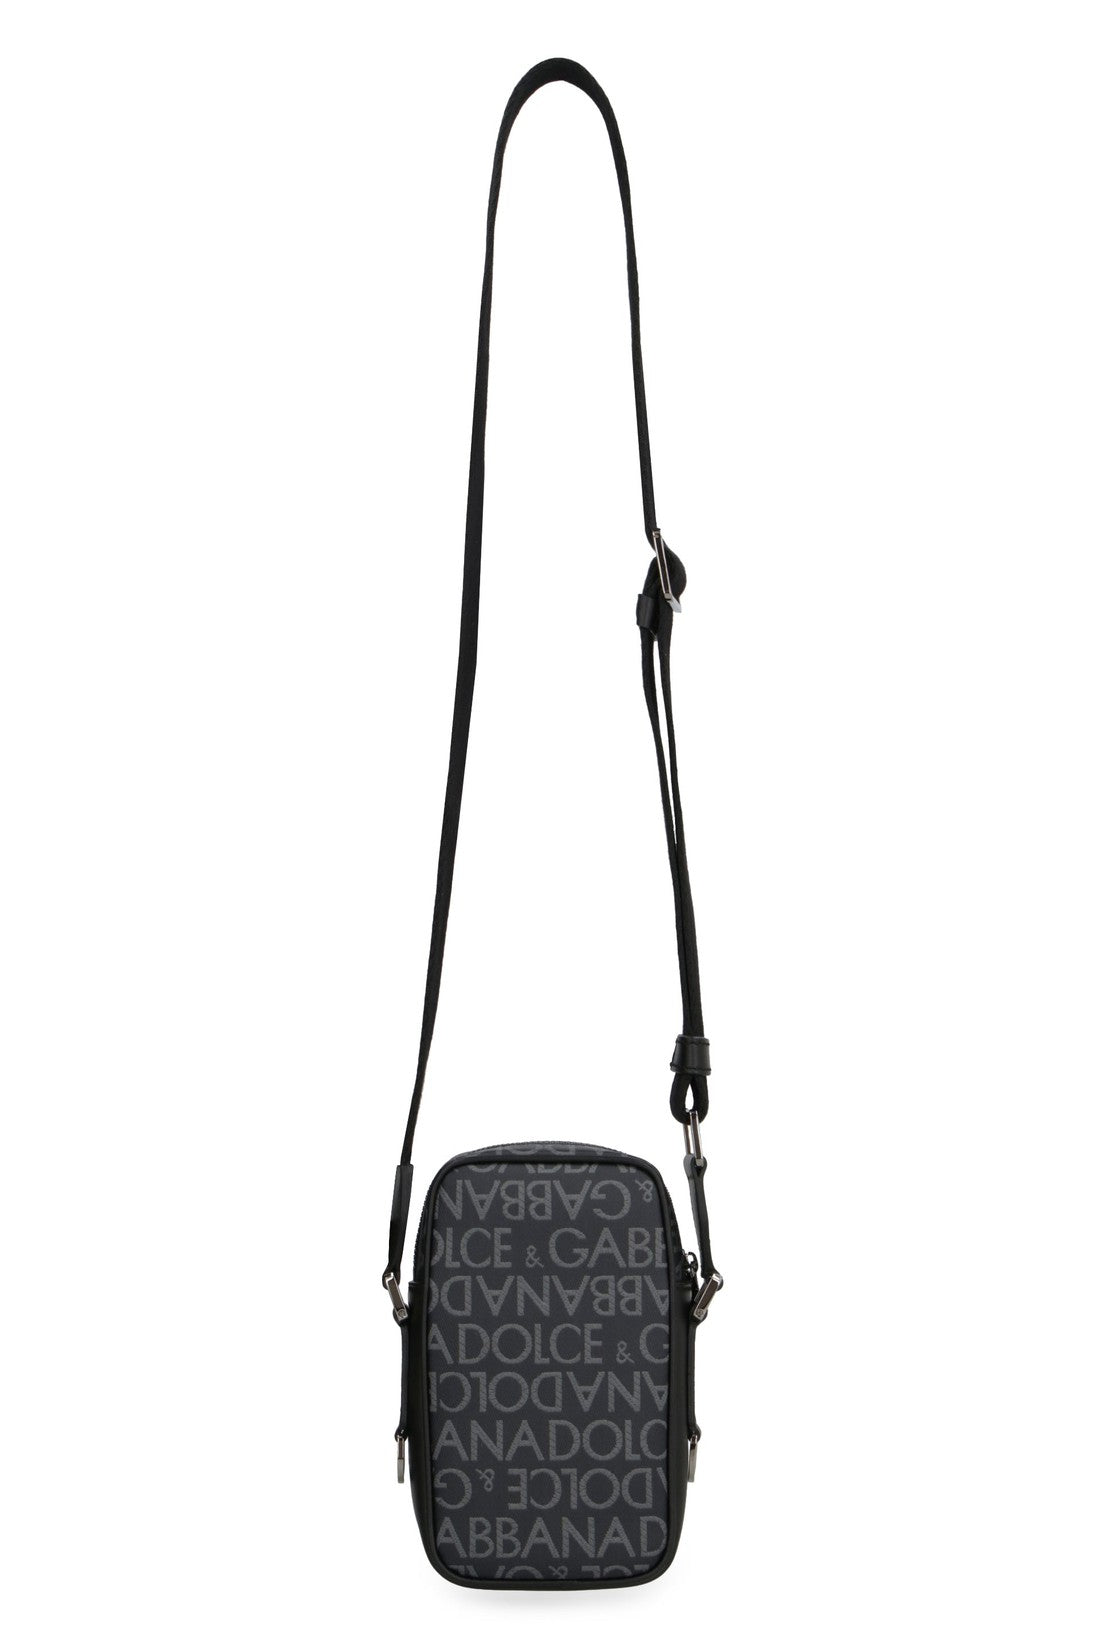 Dolce & Gabbana-OUTLET-SALE-Canvas shoulder bag-ARCHIVIST